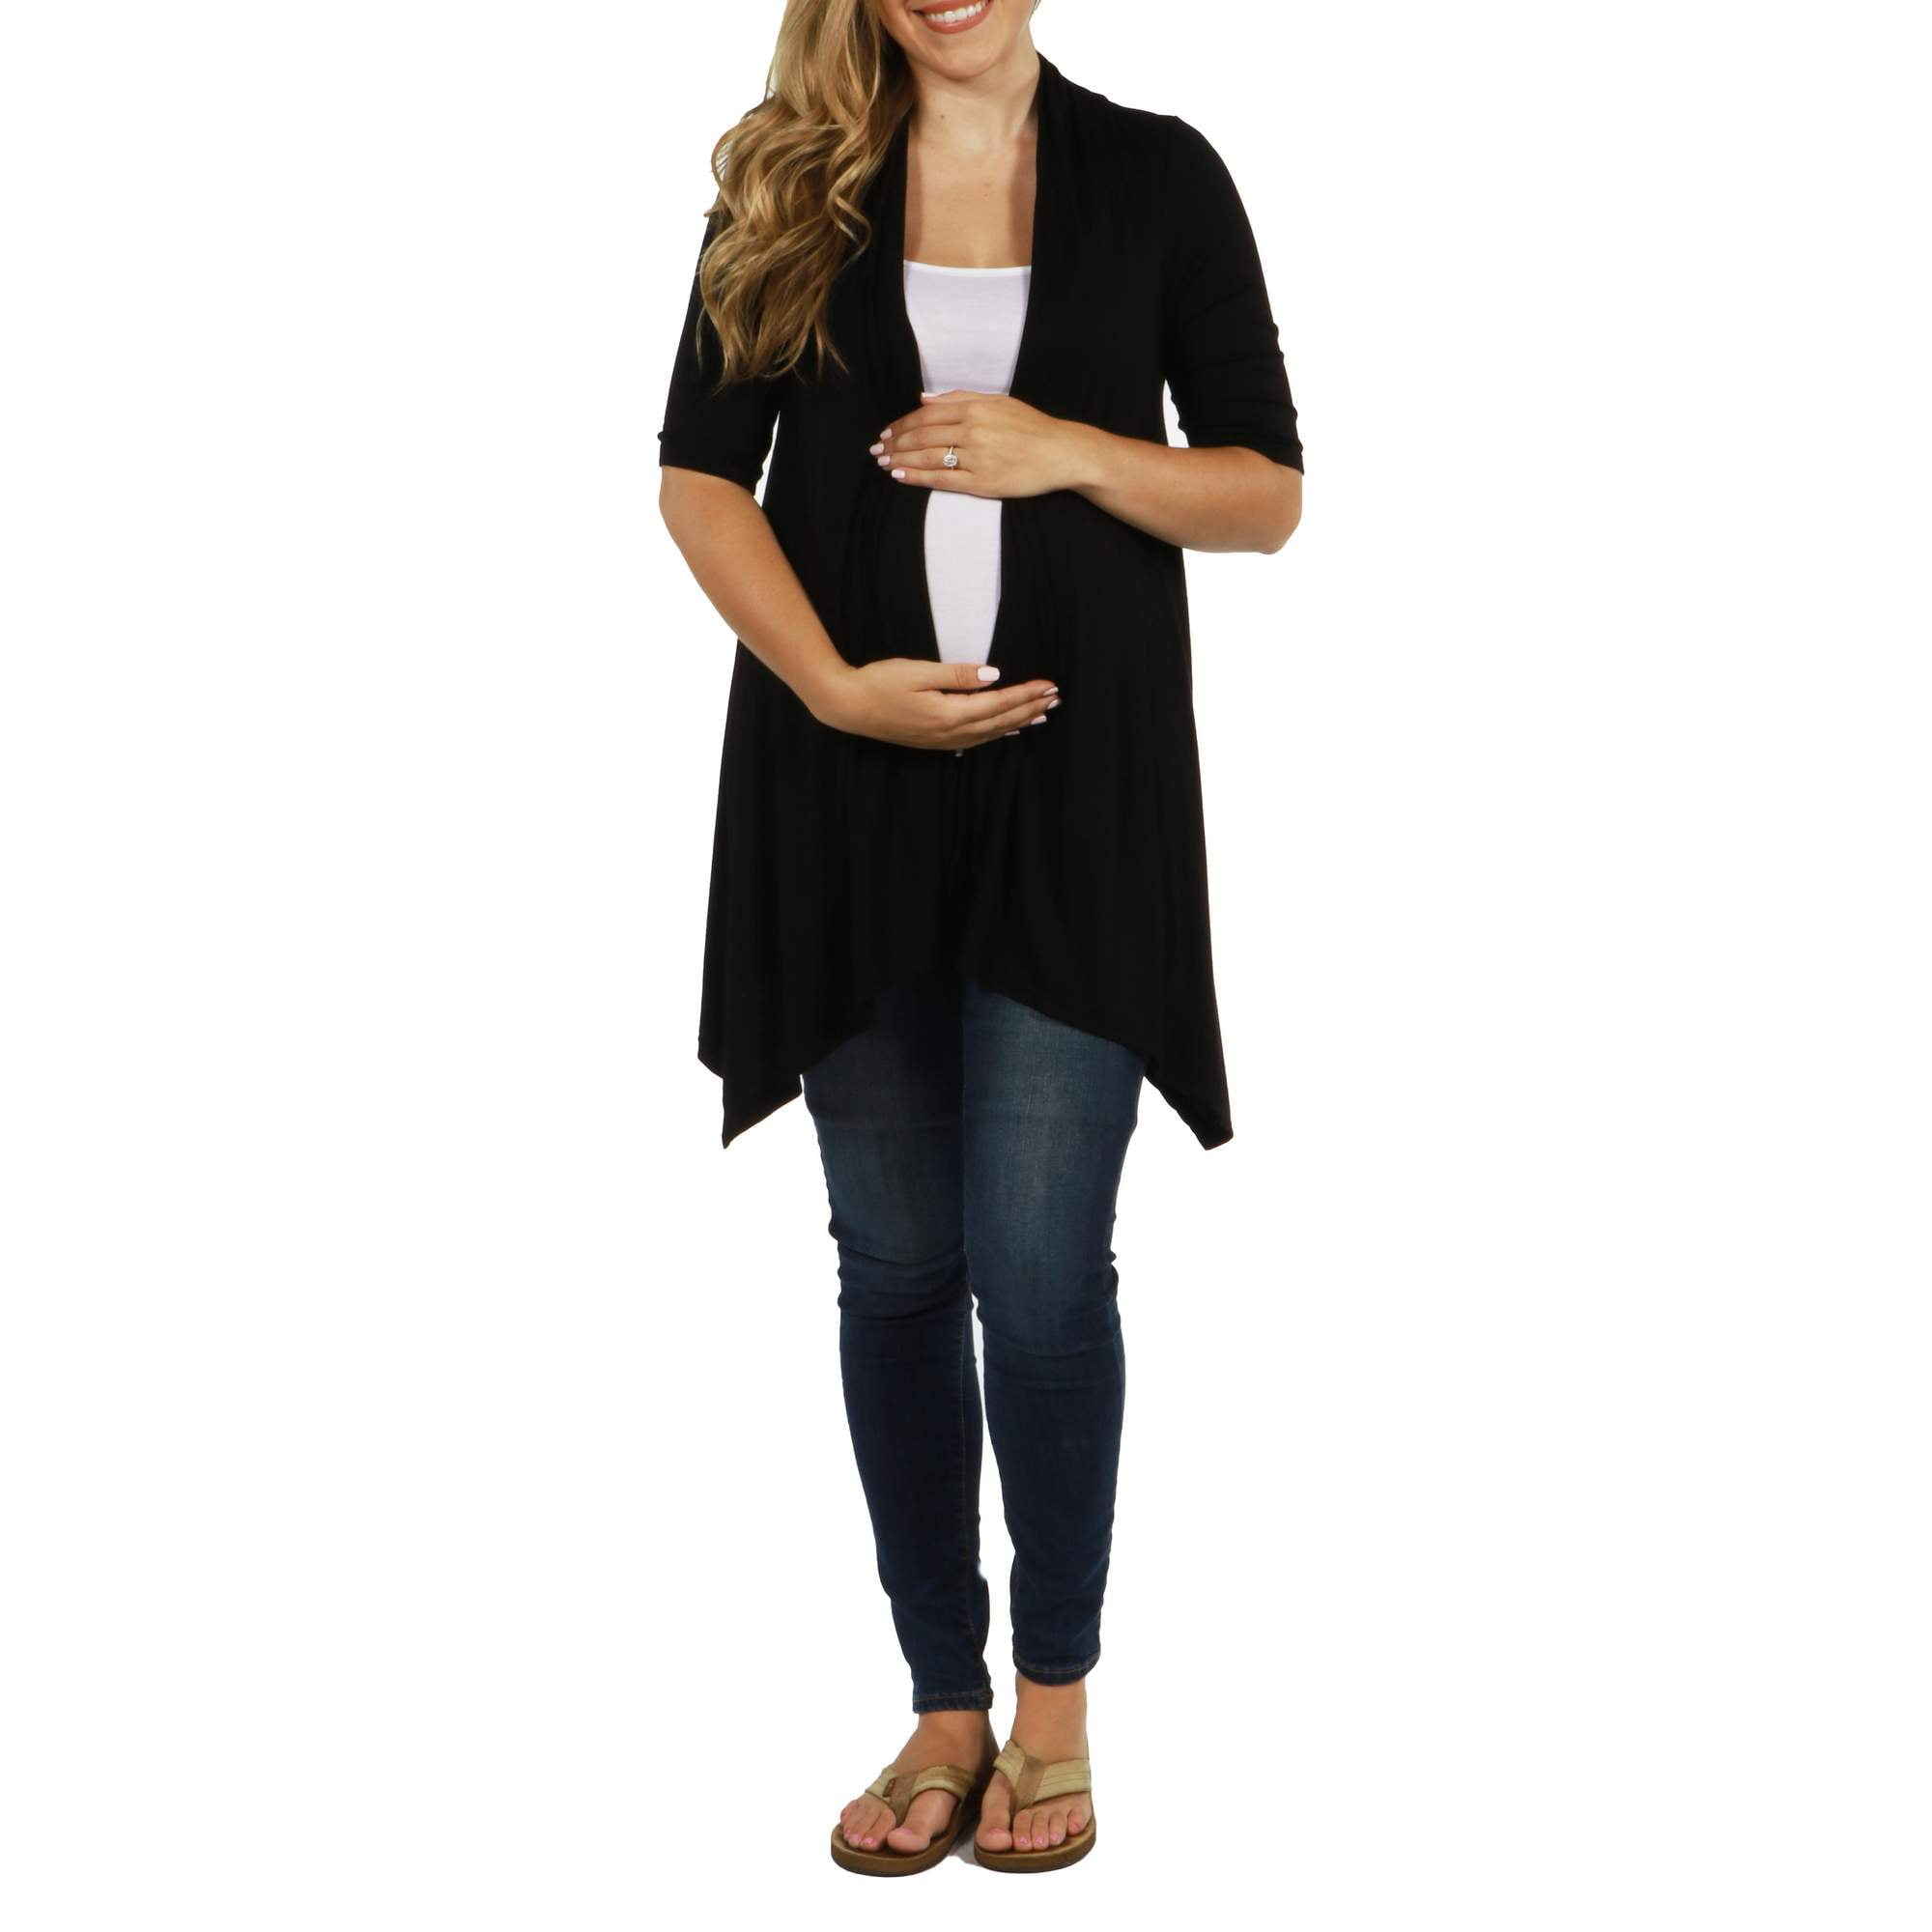 Superstar Maternity Cardigan Shrug -- Available in Plus Sizes - Walmart.com